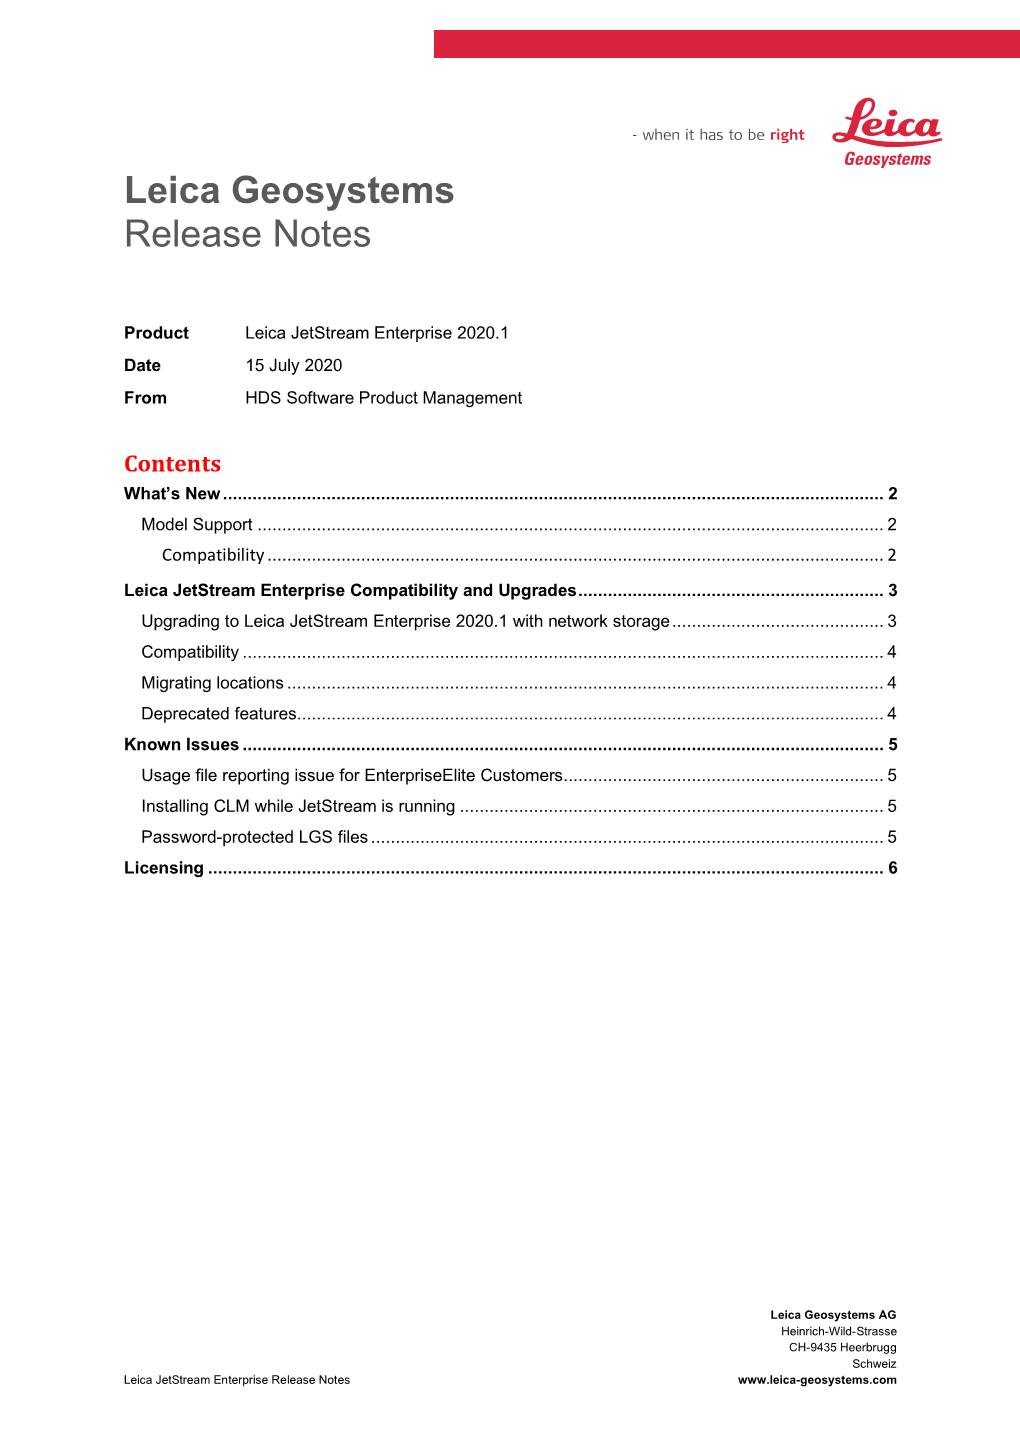 Jetstream Enterprise Release Notes